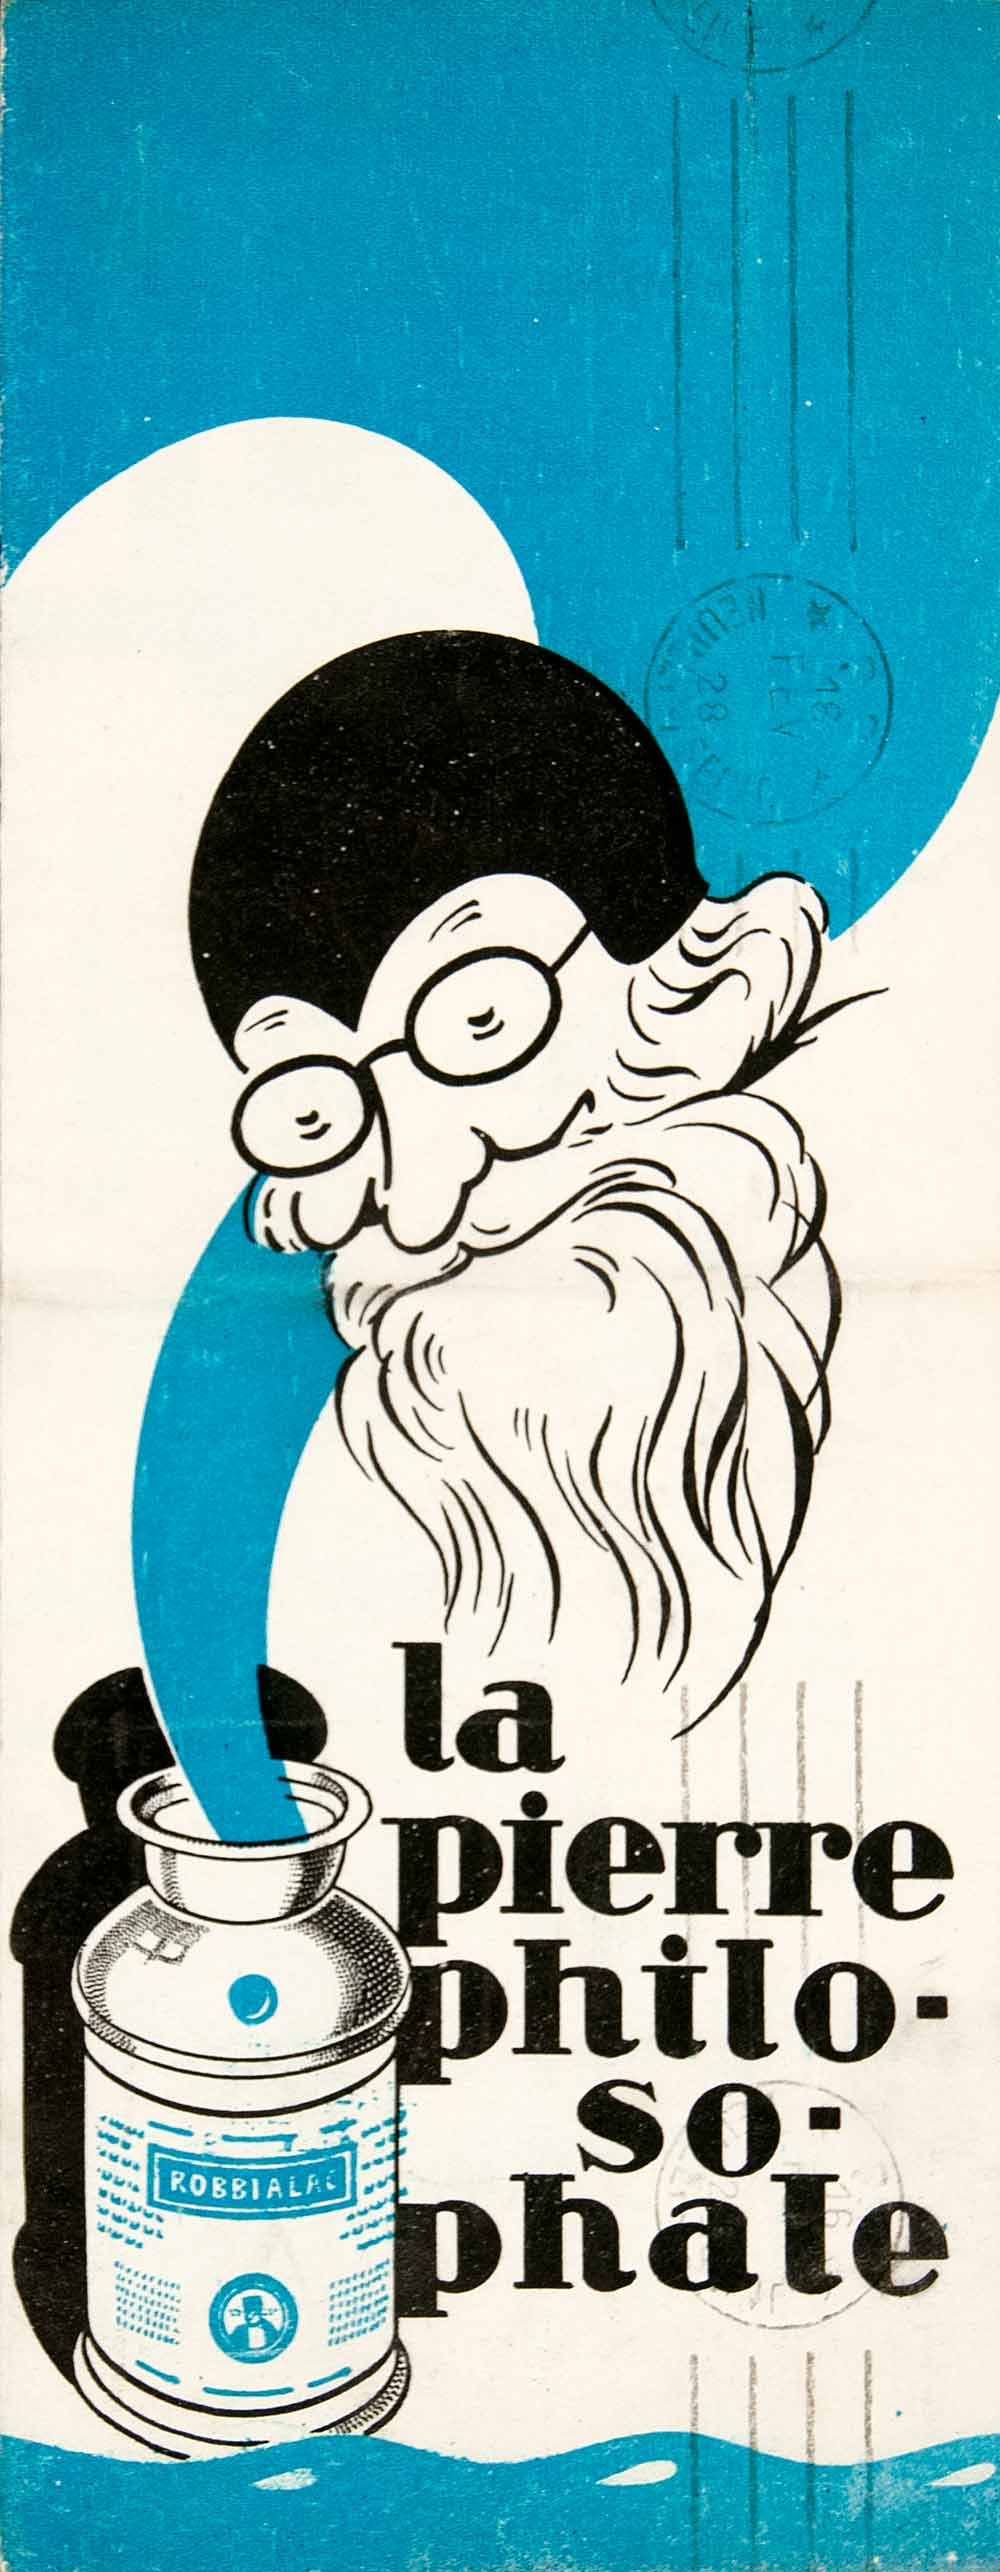 1927 Print Brochure Sample Robbialac Publicite Presse French Philosopher's VENA2